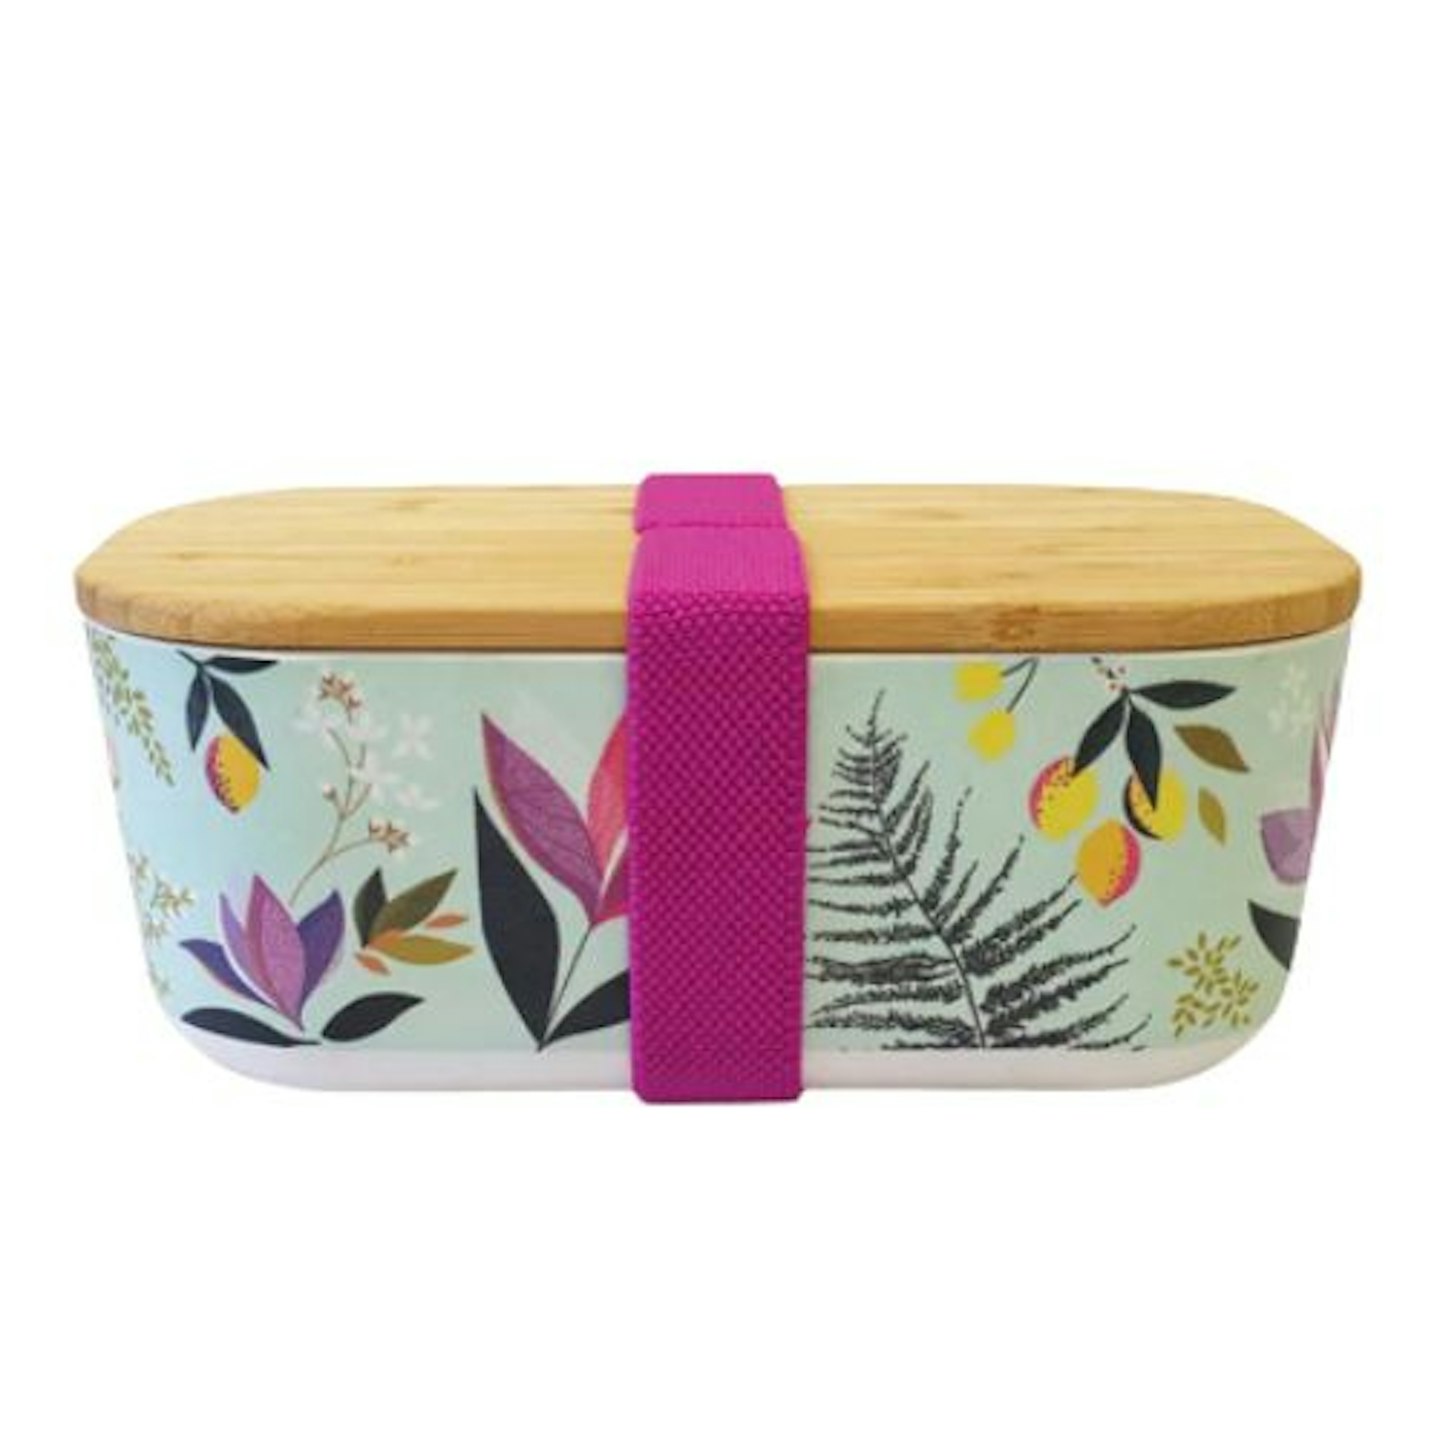 Sara Miller Orchard Bamboo Lunch Box